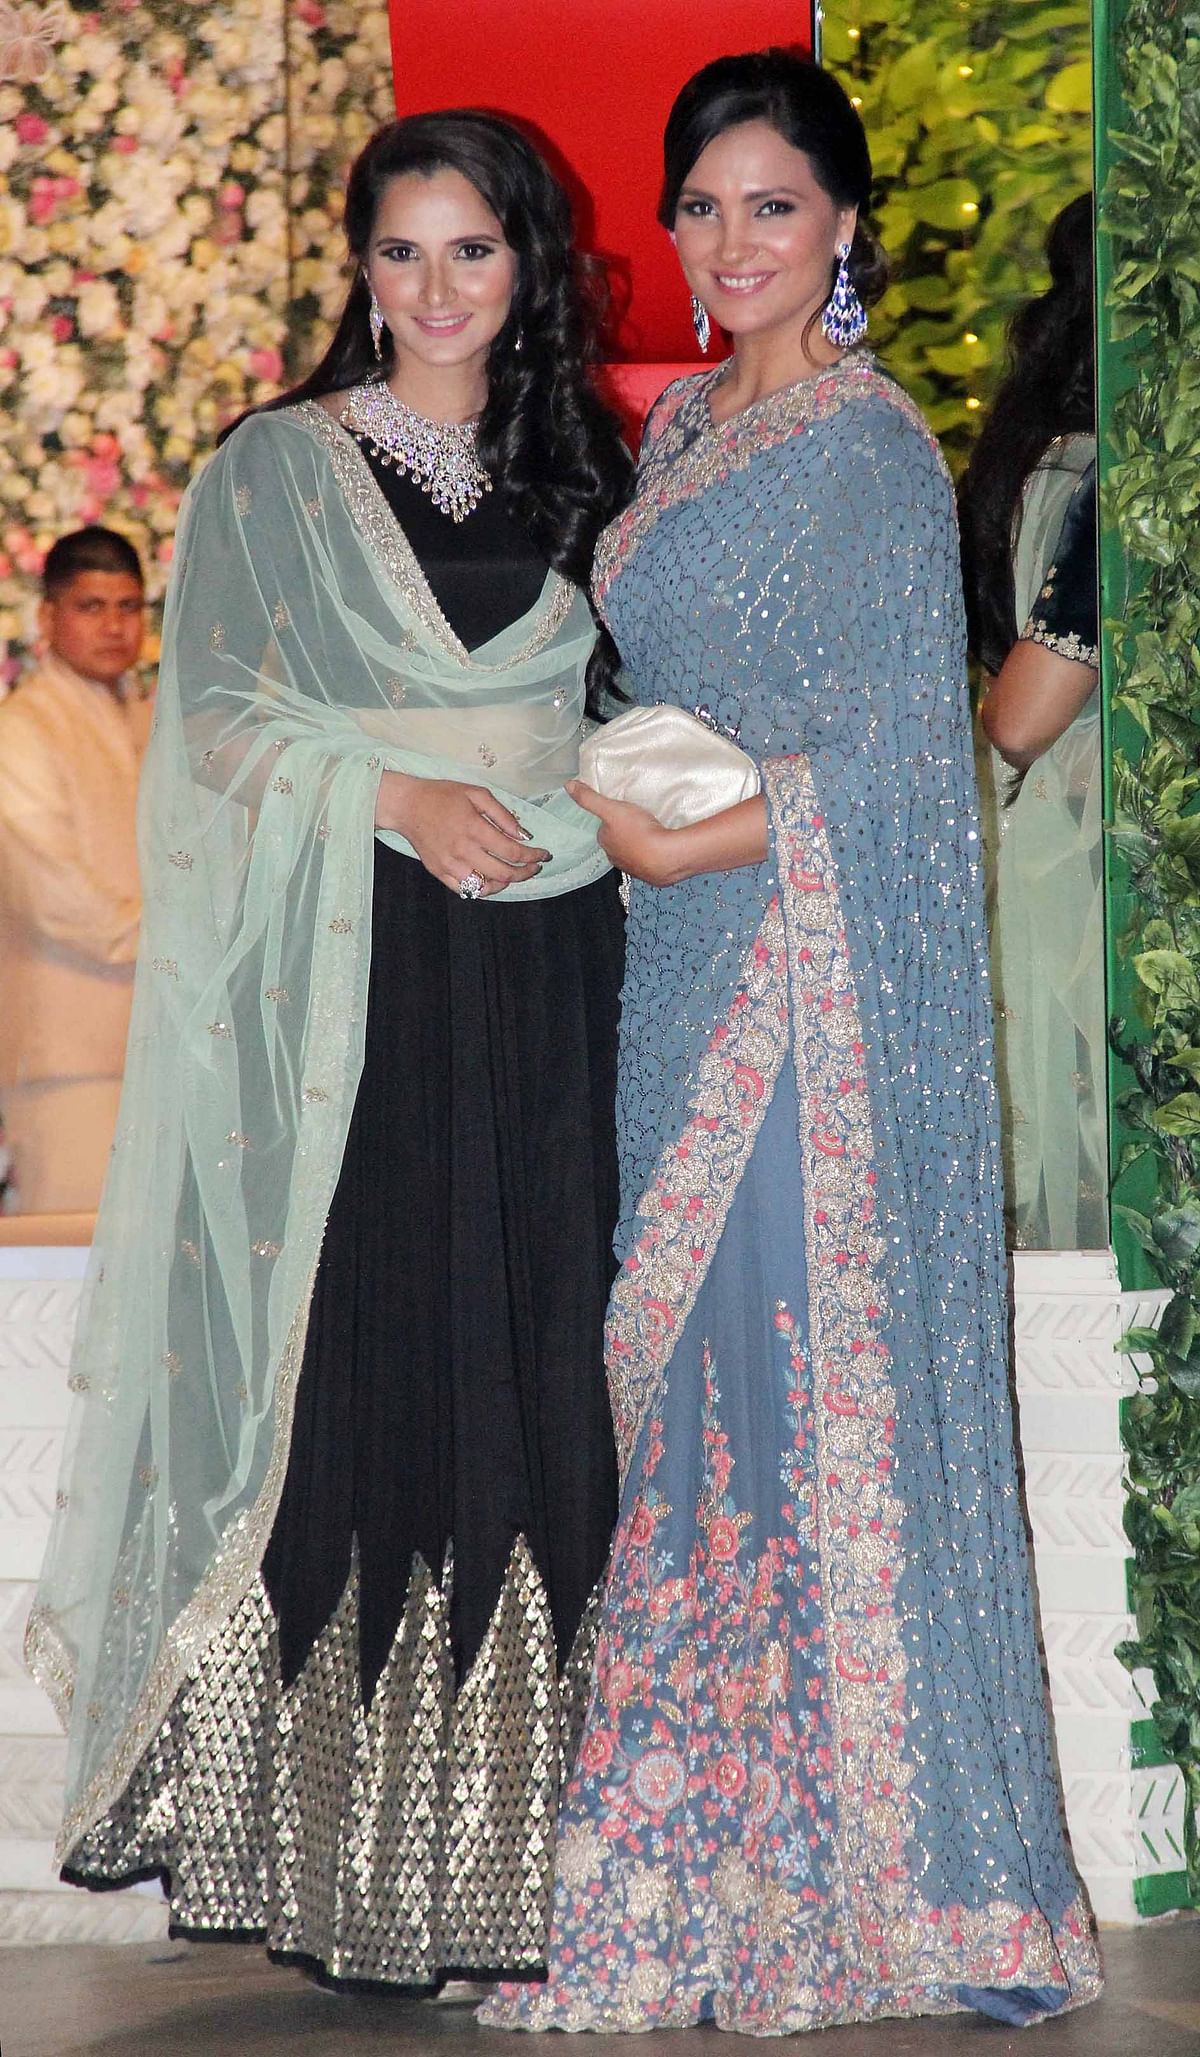 Sania Mirza and Lara Dutta at the wedding celebrations. (Photo: Yogen Shah)